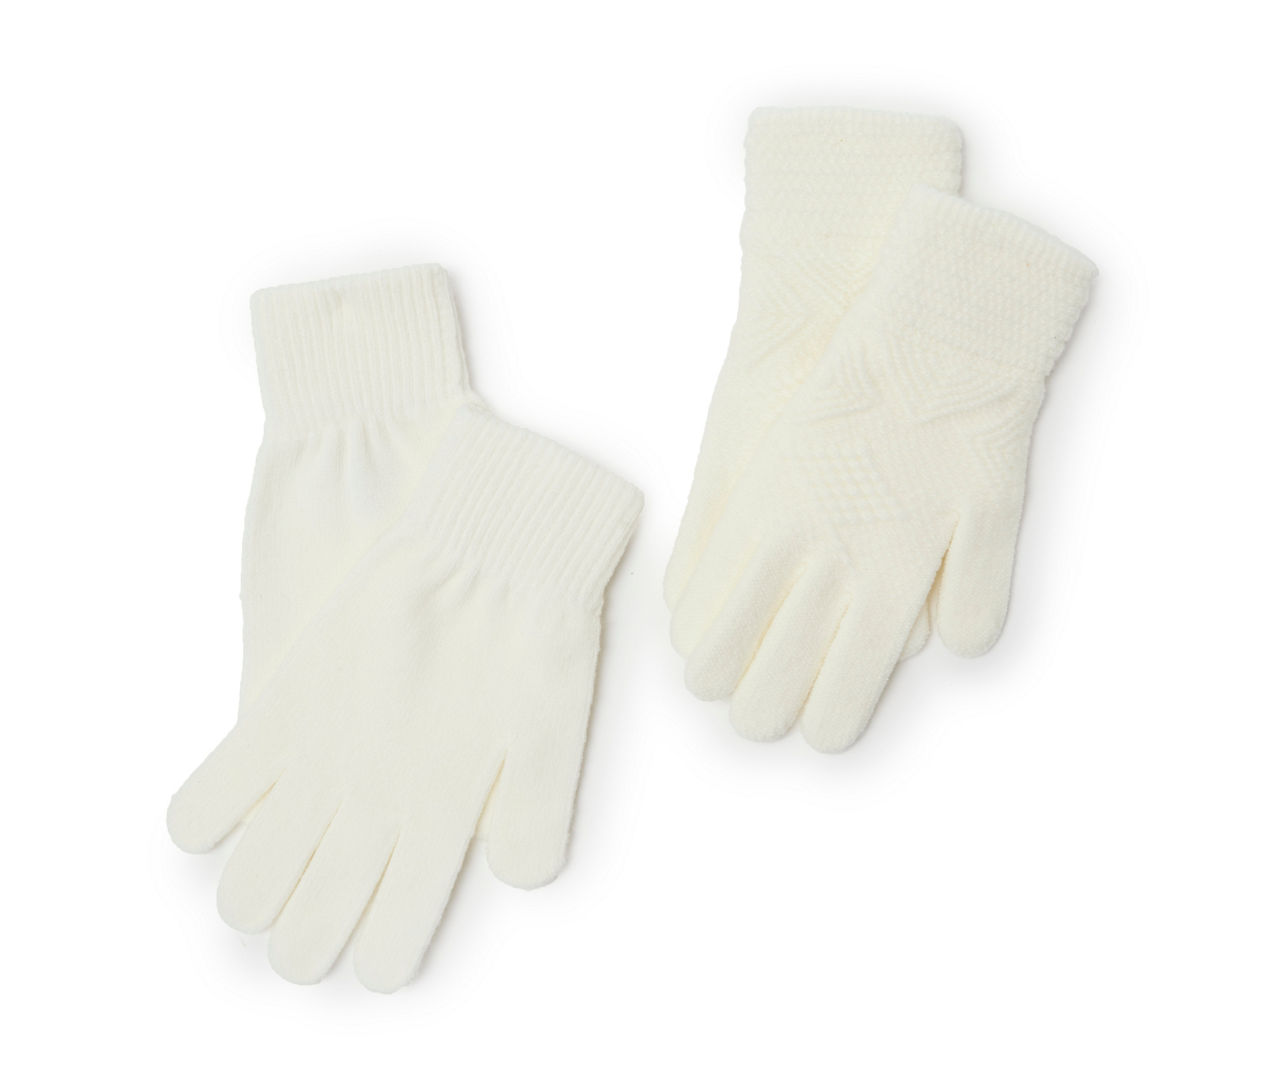 Ivory Textured & Plain Knit 2-Pair Gloves Set